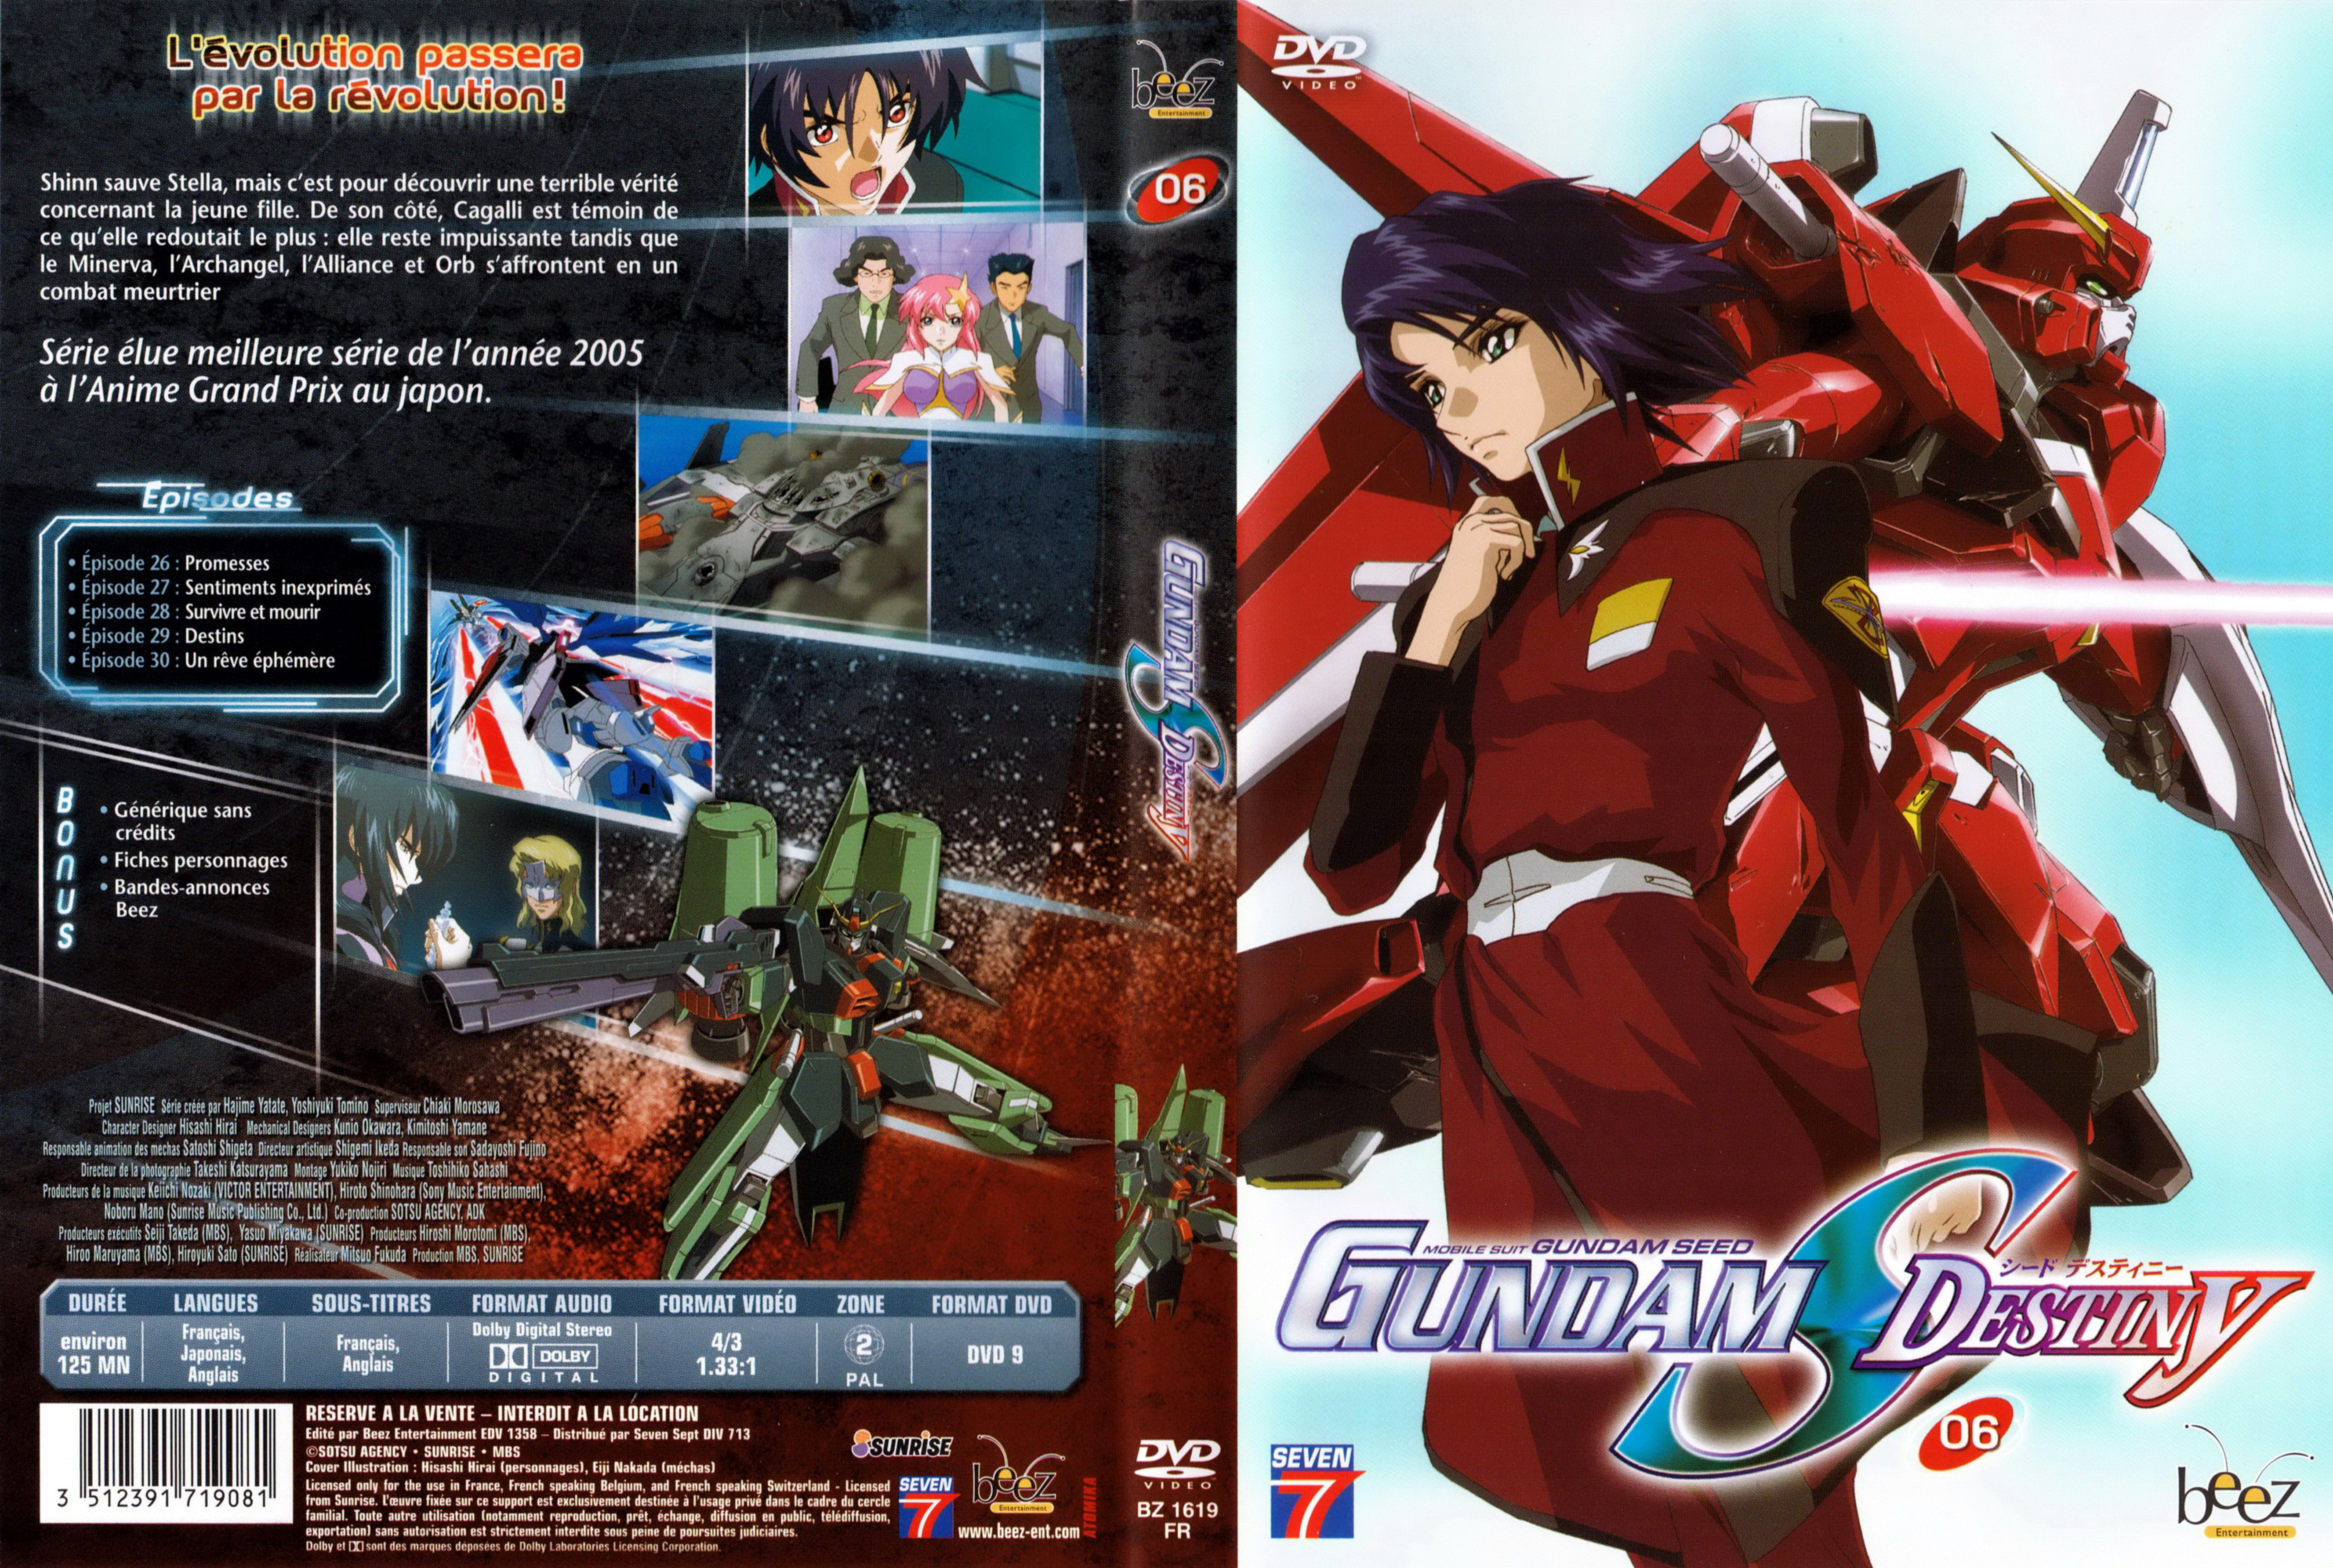 Jaquette DVD Gundam destiny vol 06